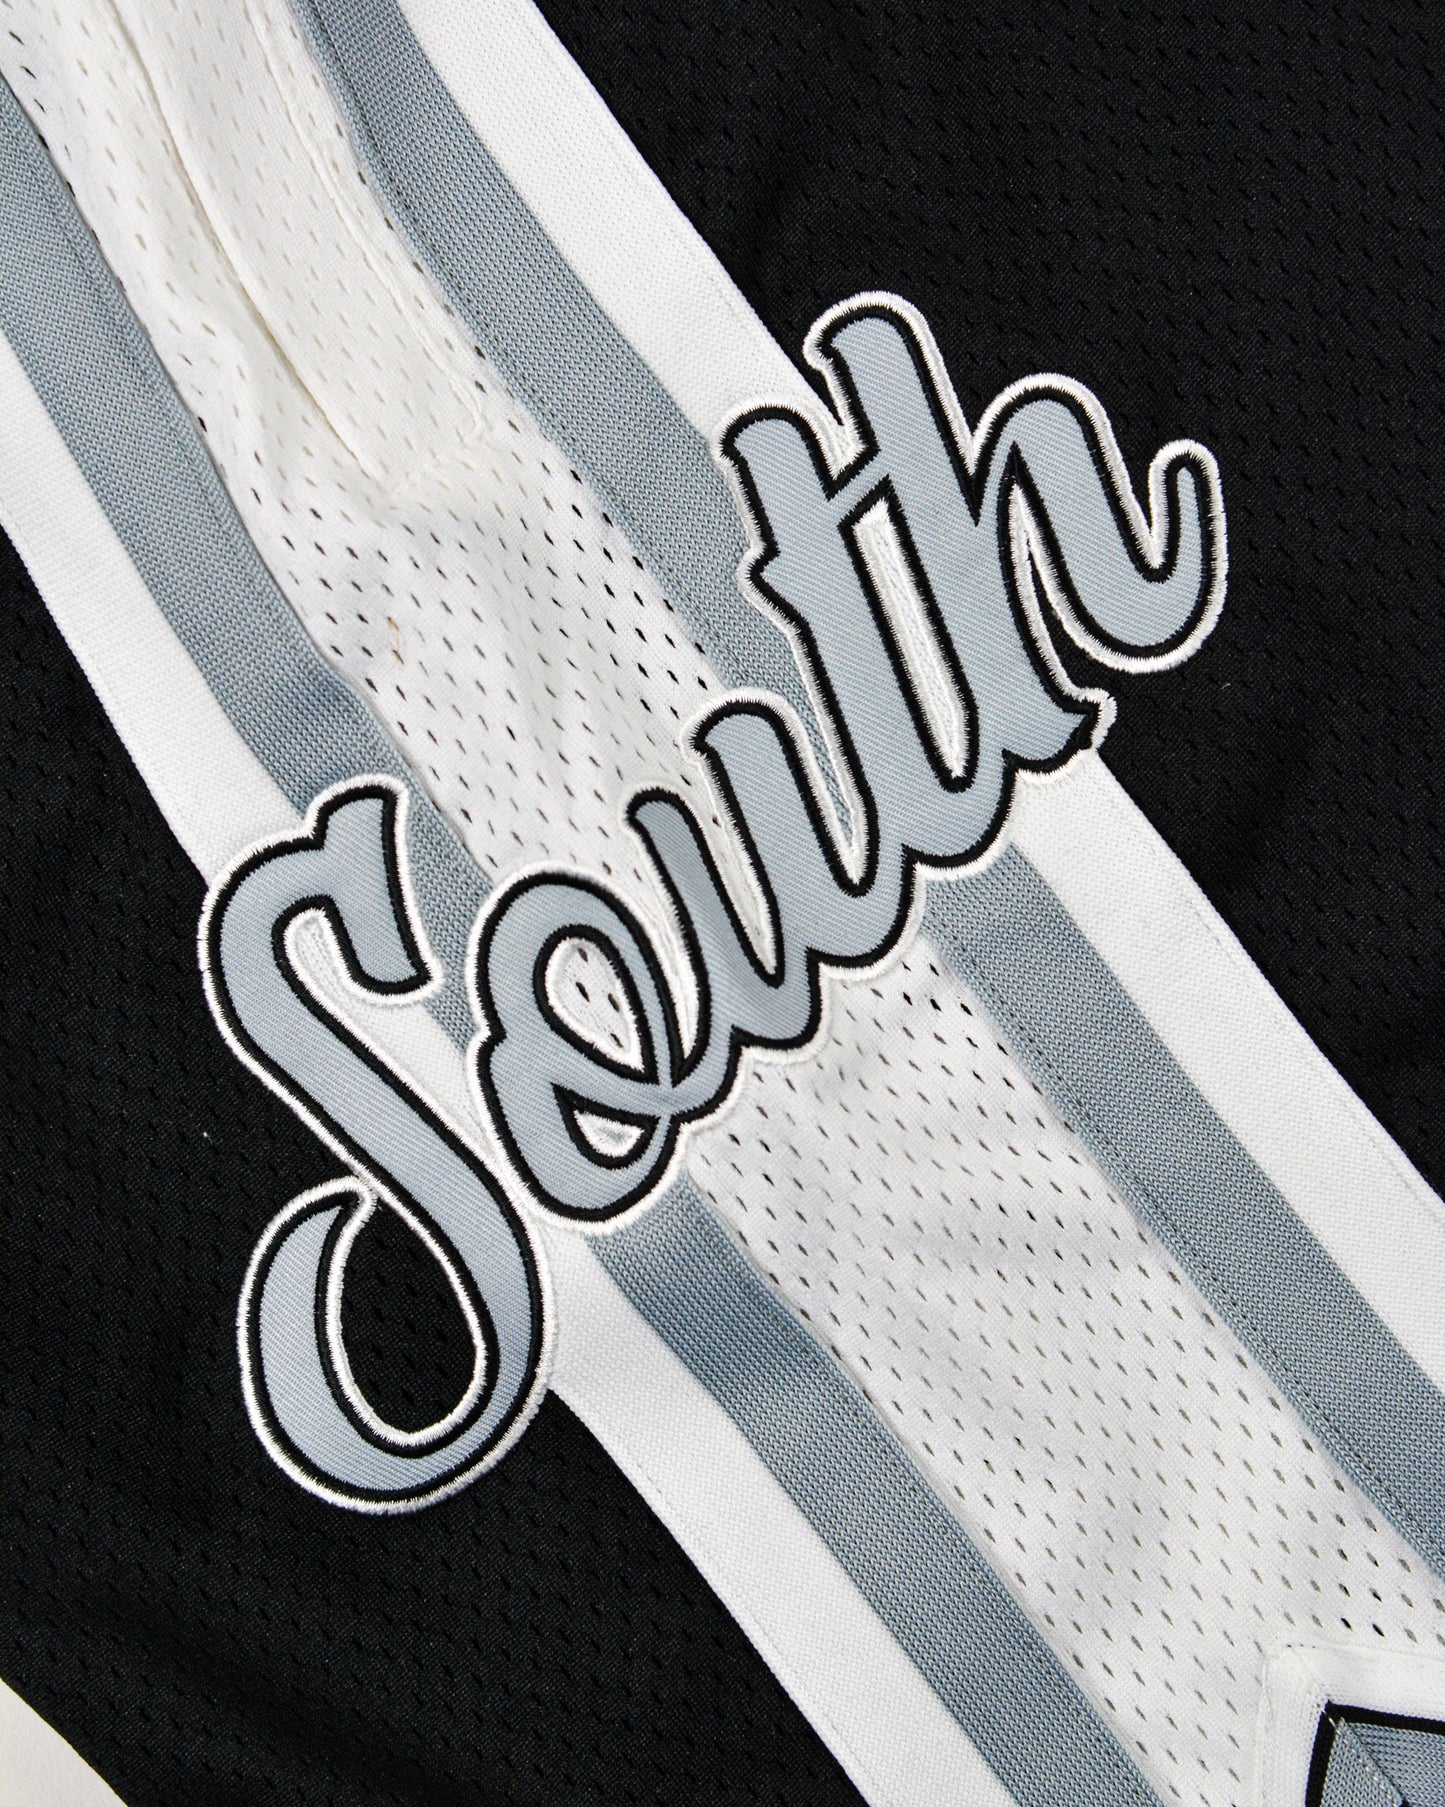 South Side Black & White Basketball Shorts